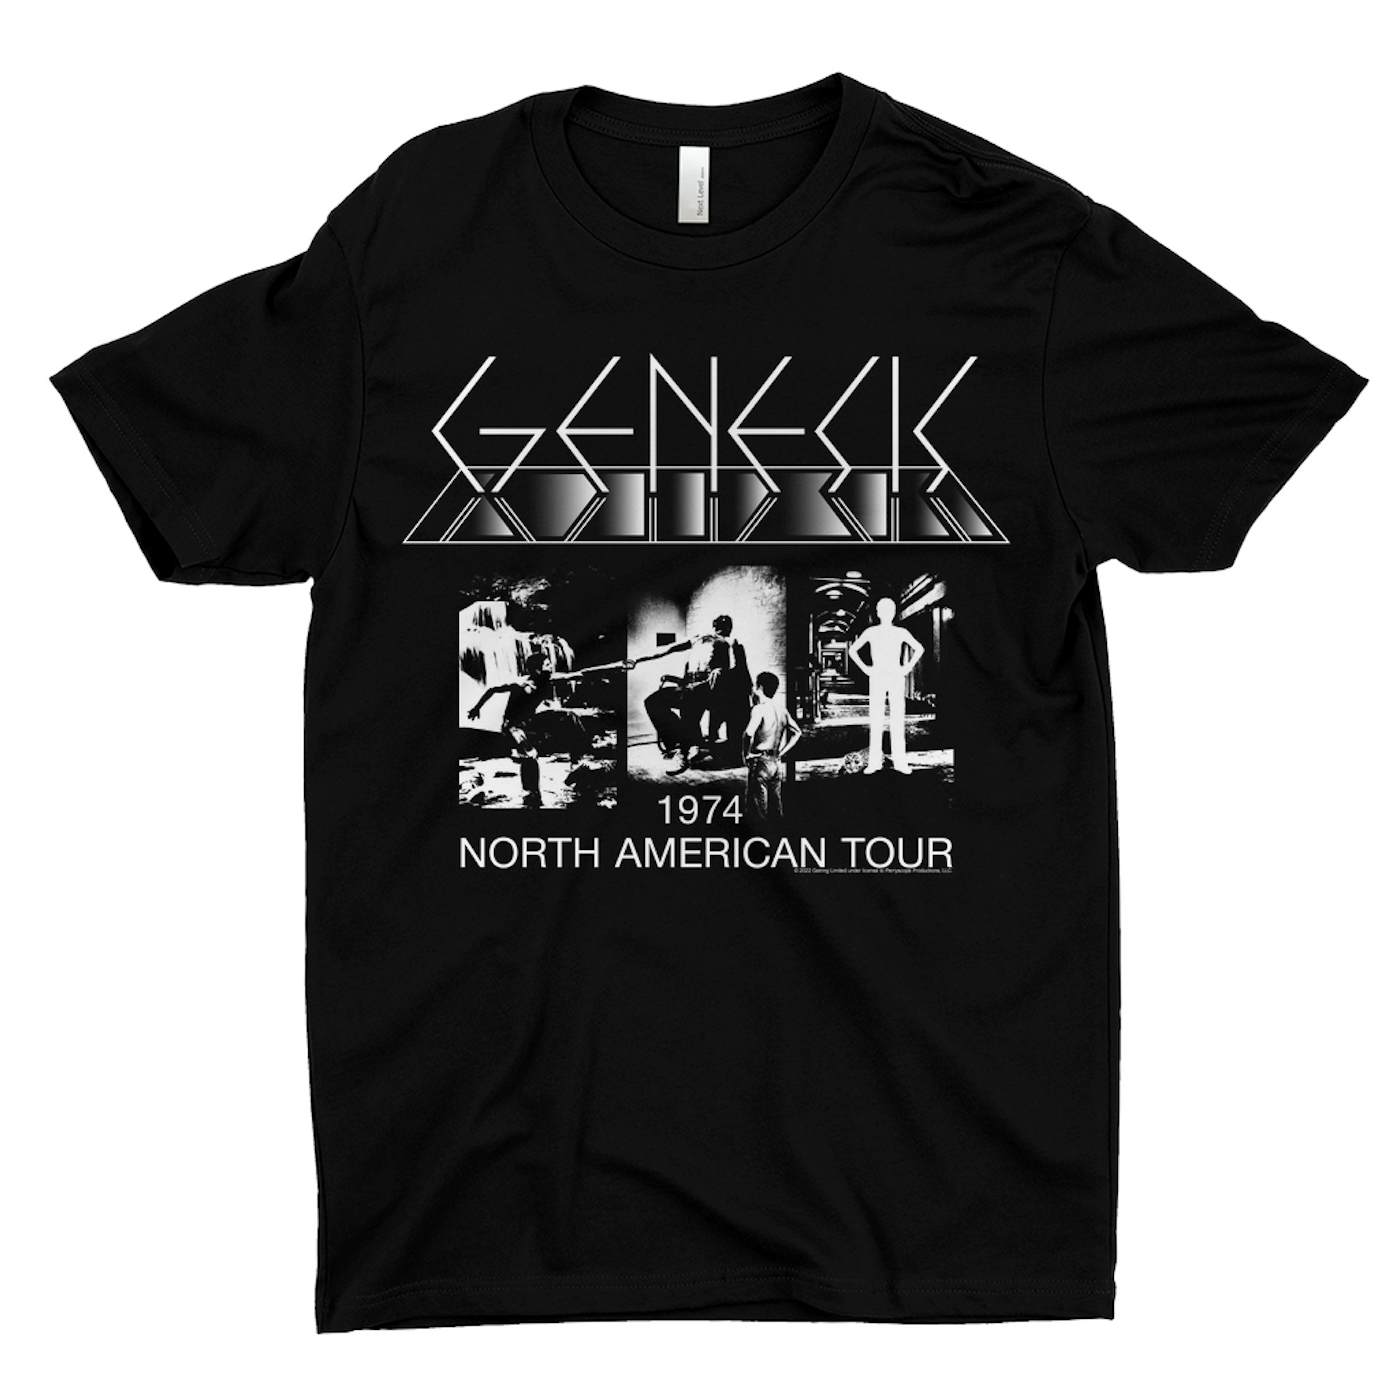 Band Merch - T-Shirts, Vinyl, Posters & Merchandise